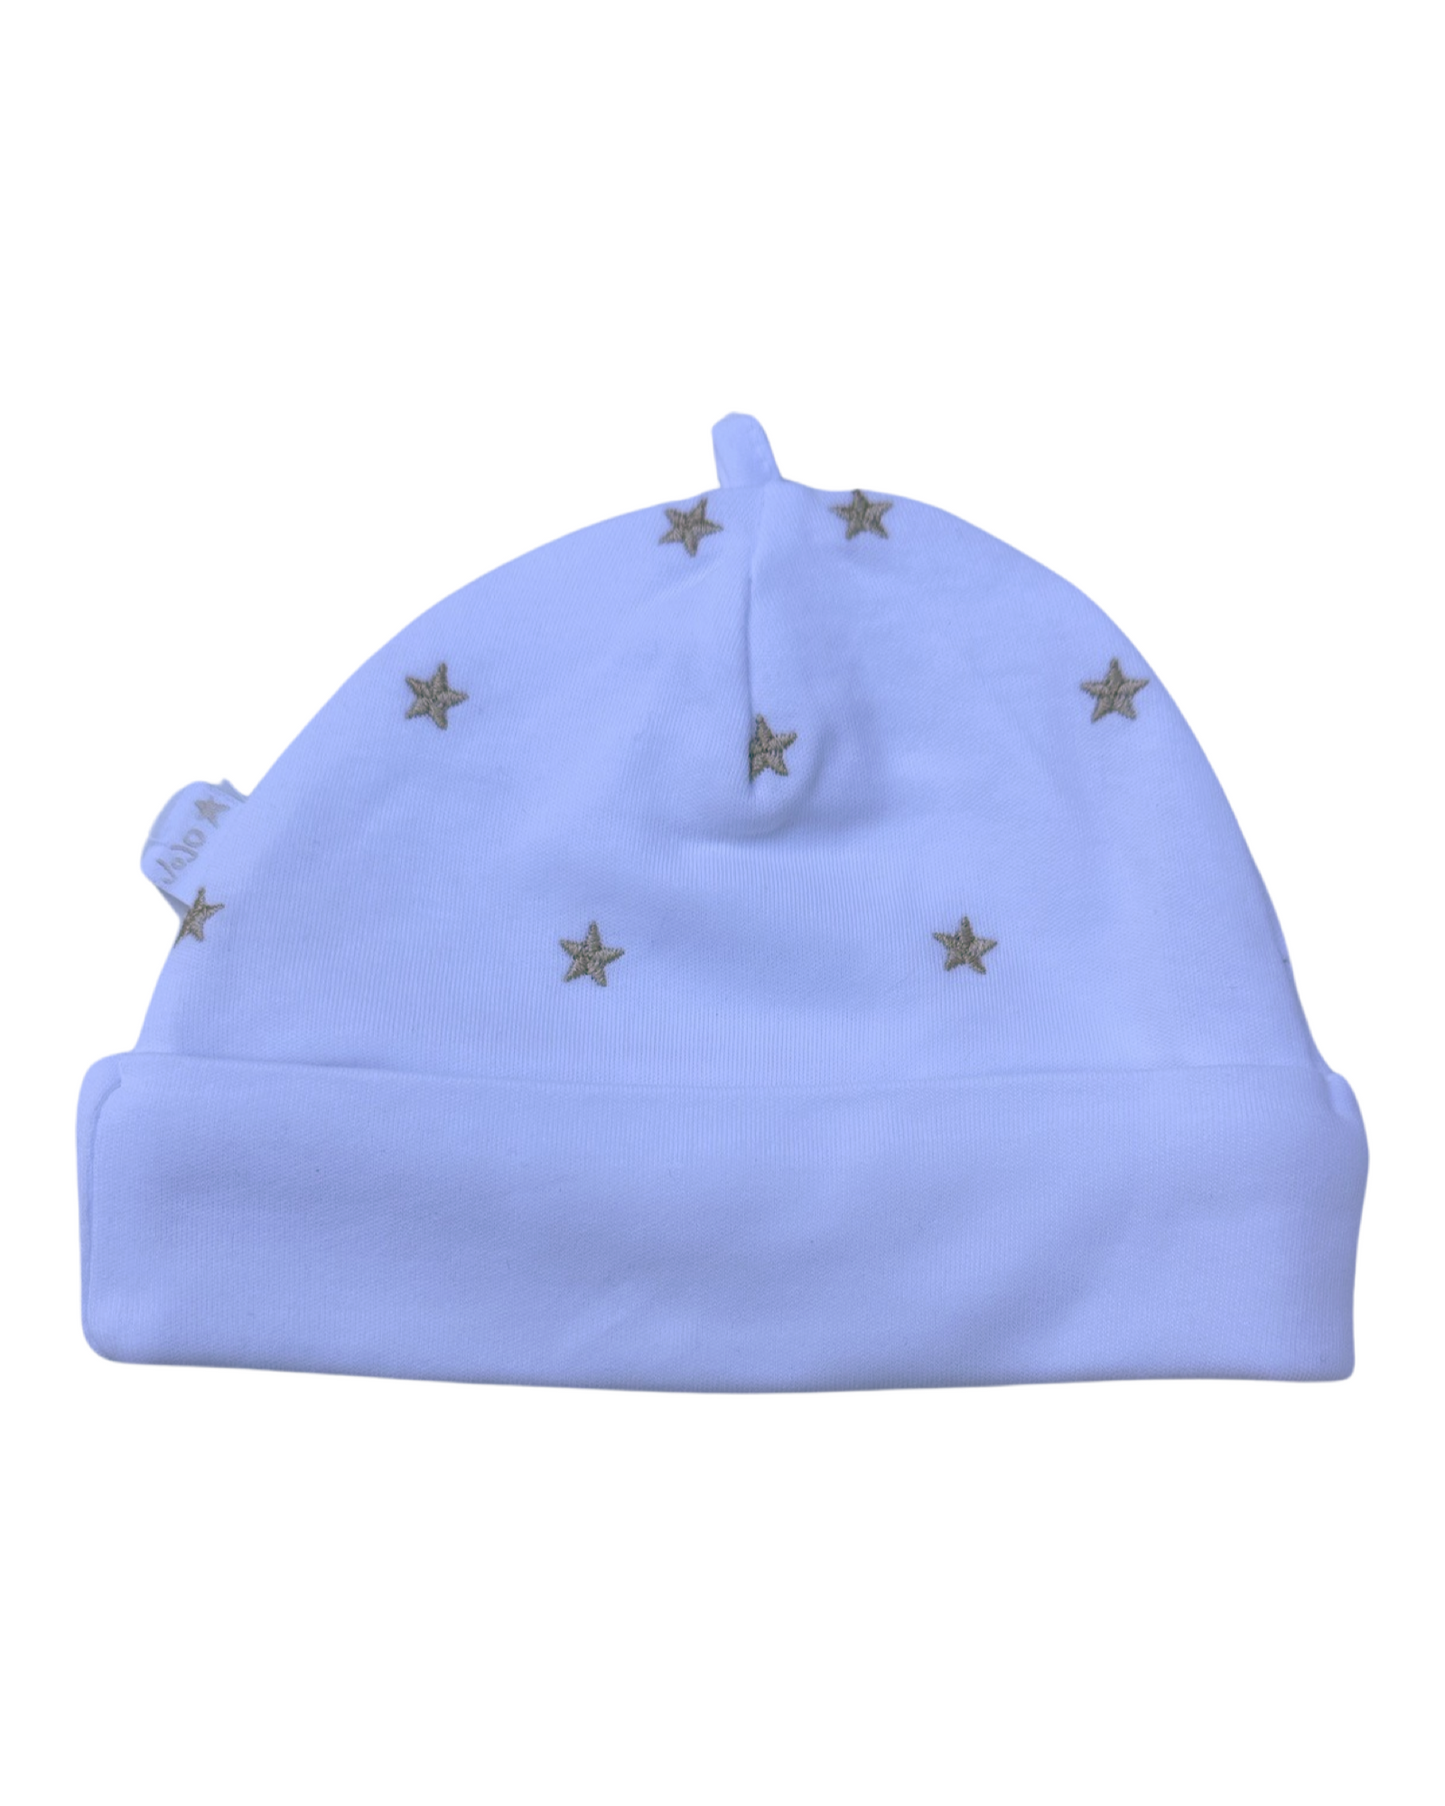 JoJo Maman Bebe star print jersey hat (size 0-3mths)